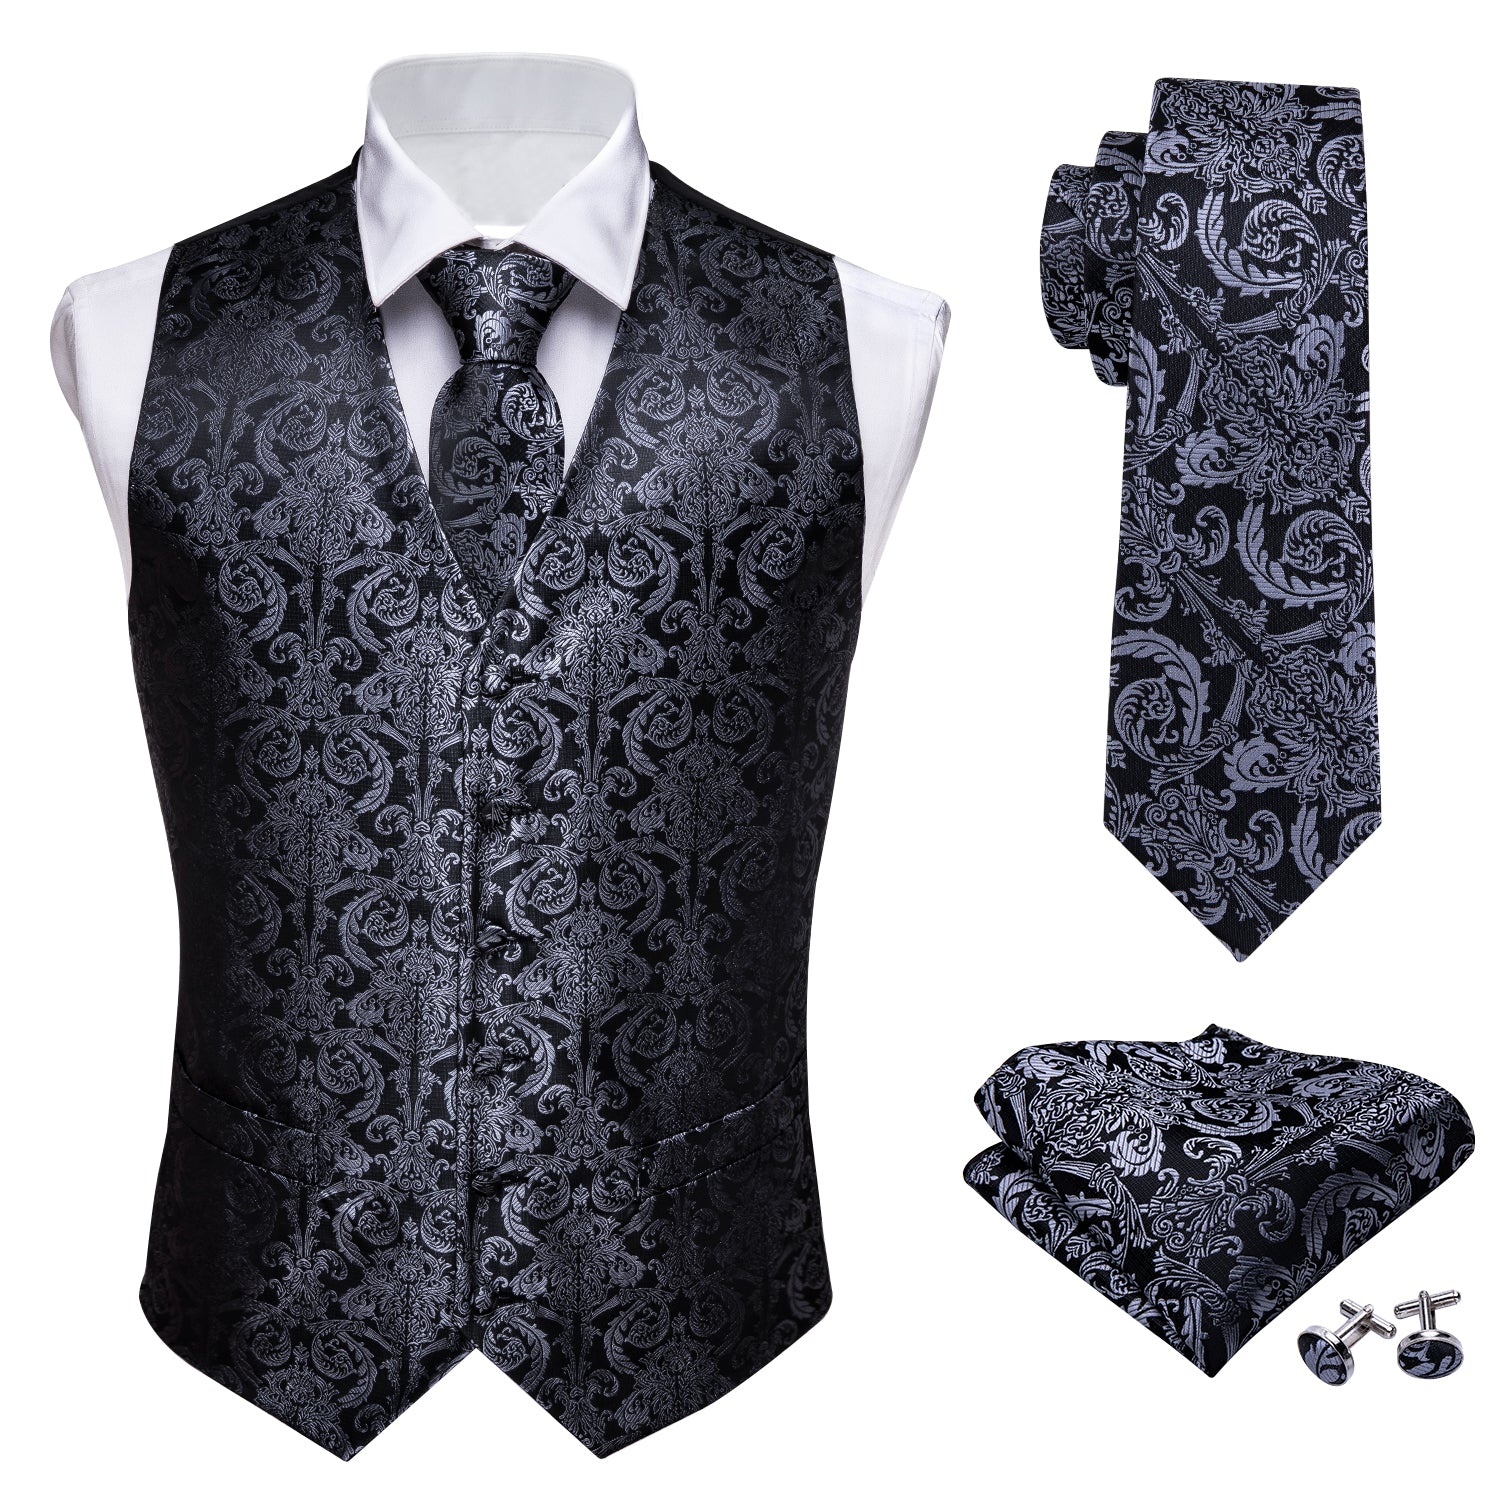 Barry.wang Men's Vest Black Grey Floral Silk Vest Necktie Pocket Square Cufflinks